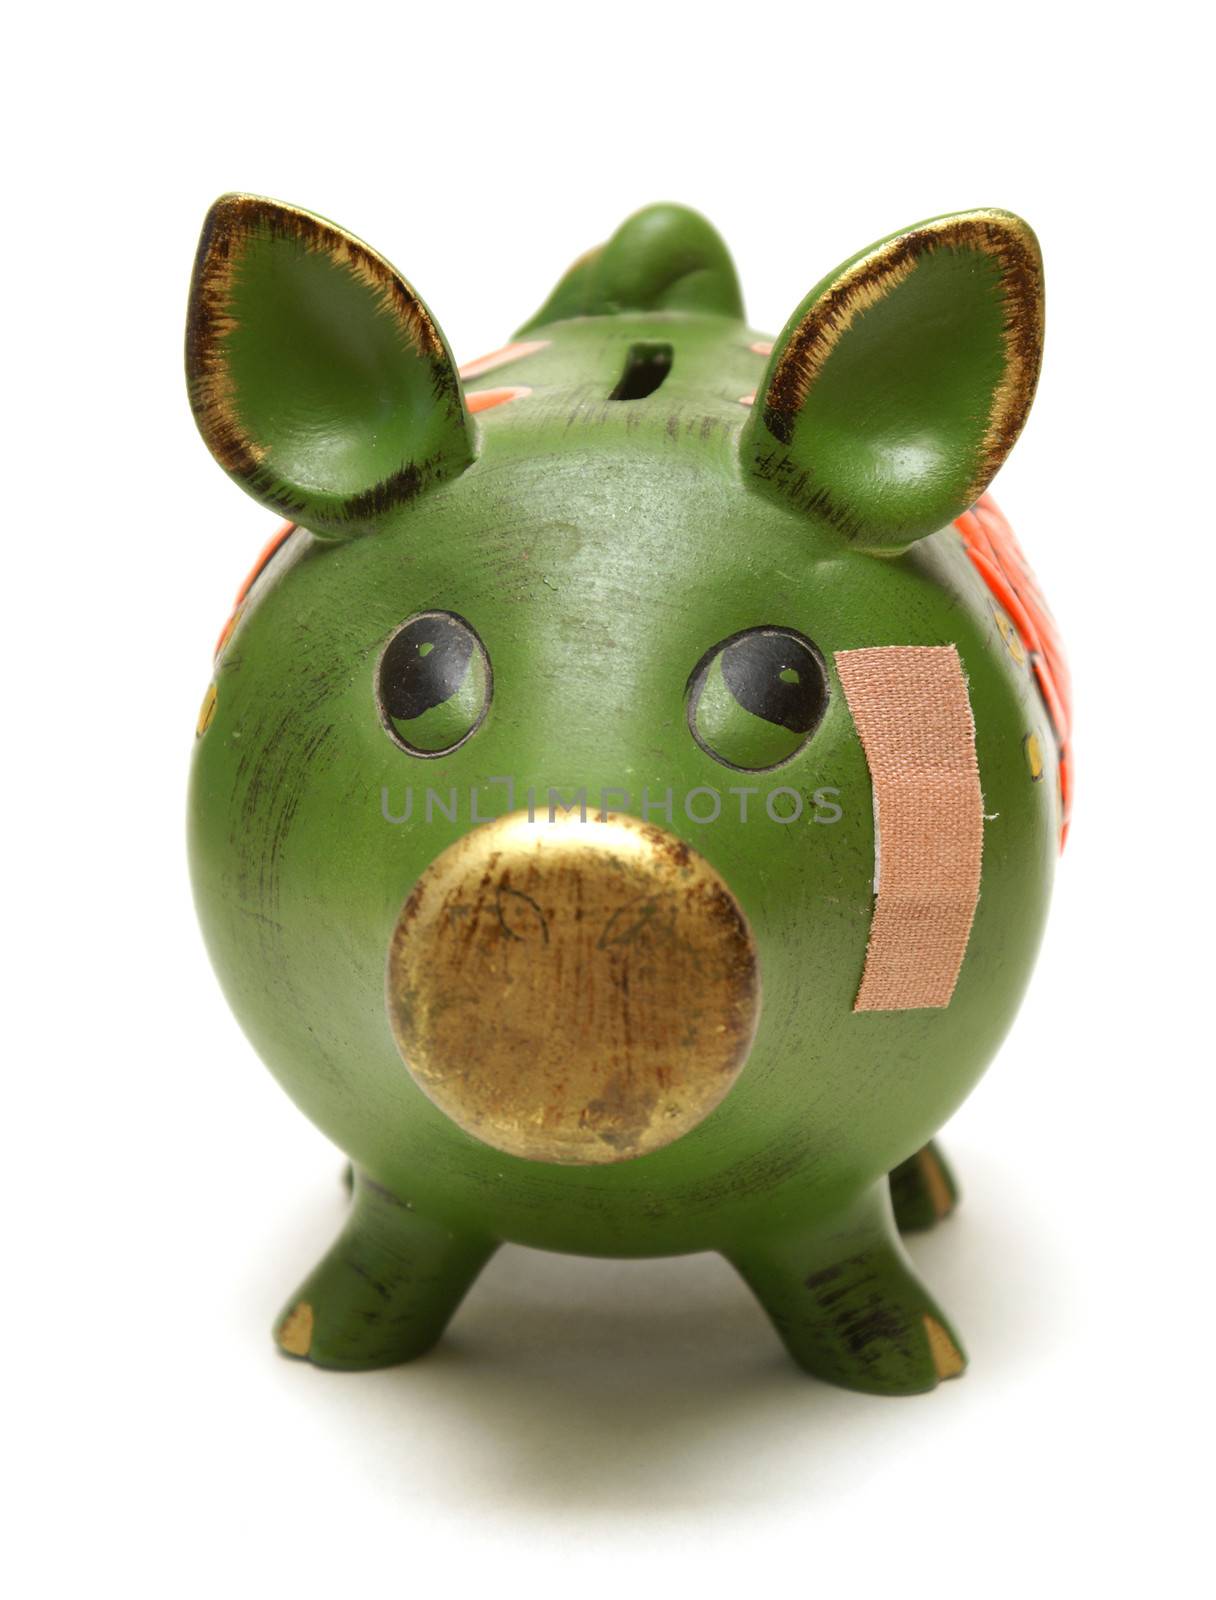 A pig bank and bandage represent financial concepts.